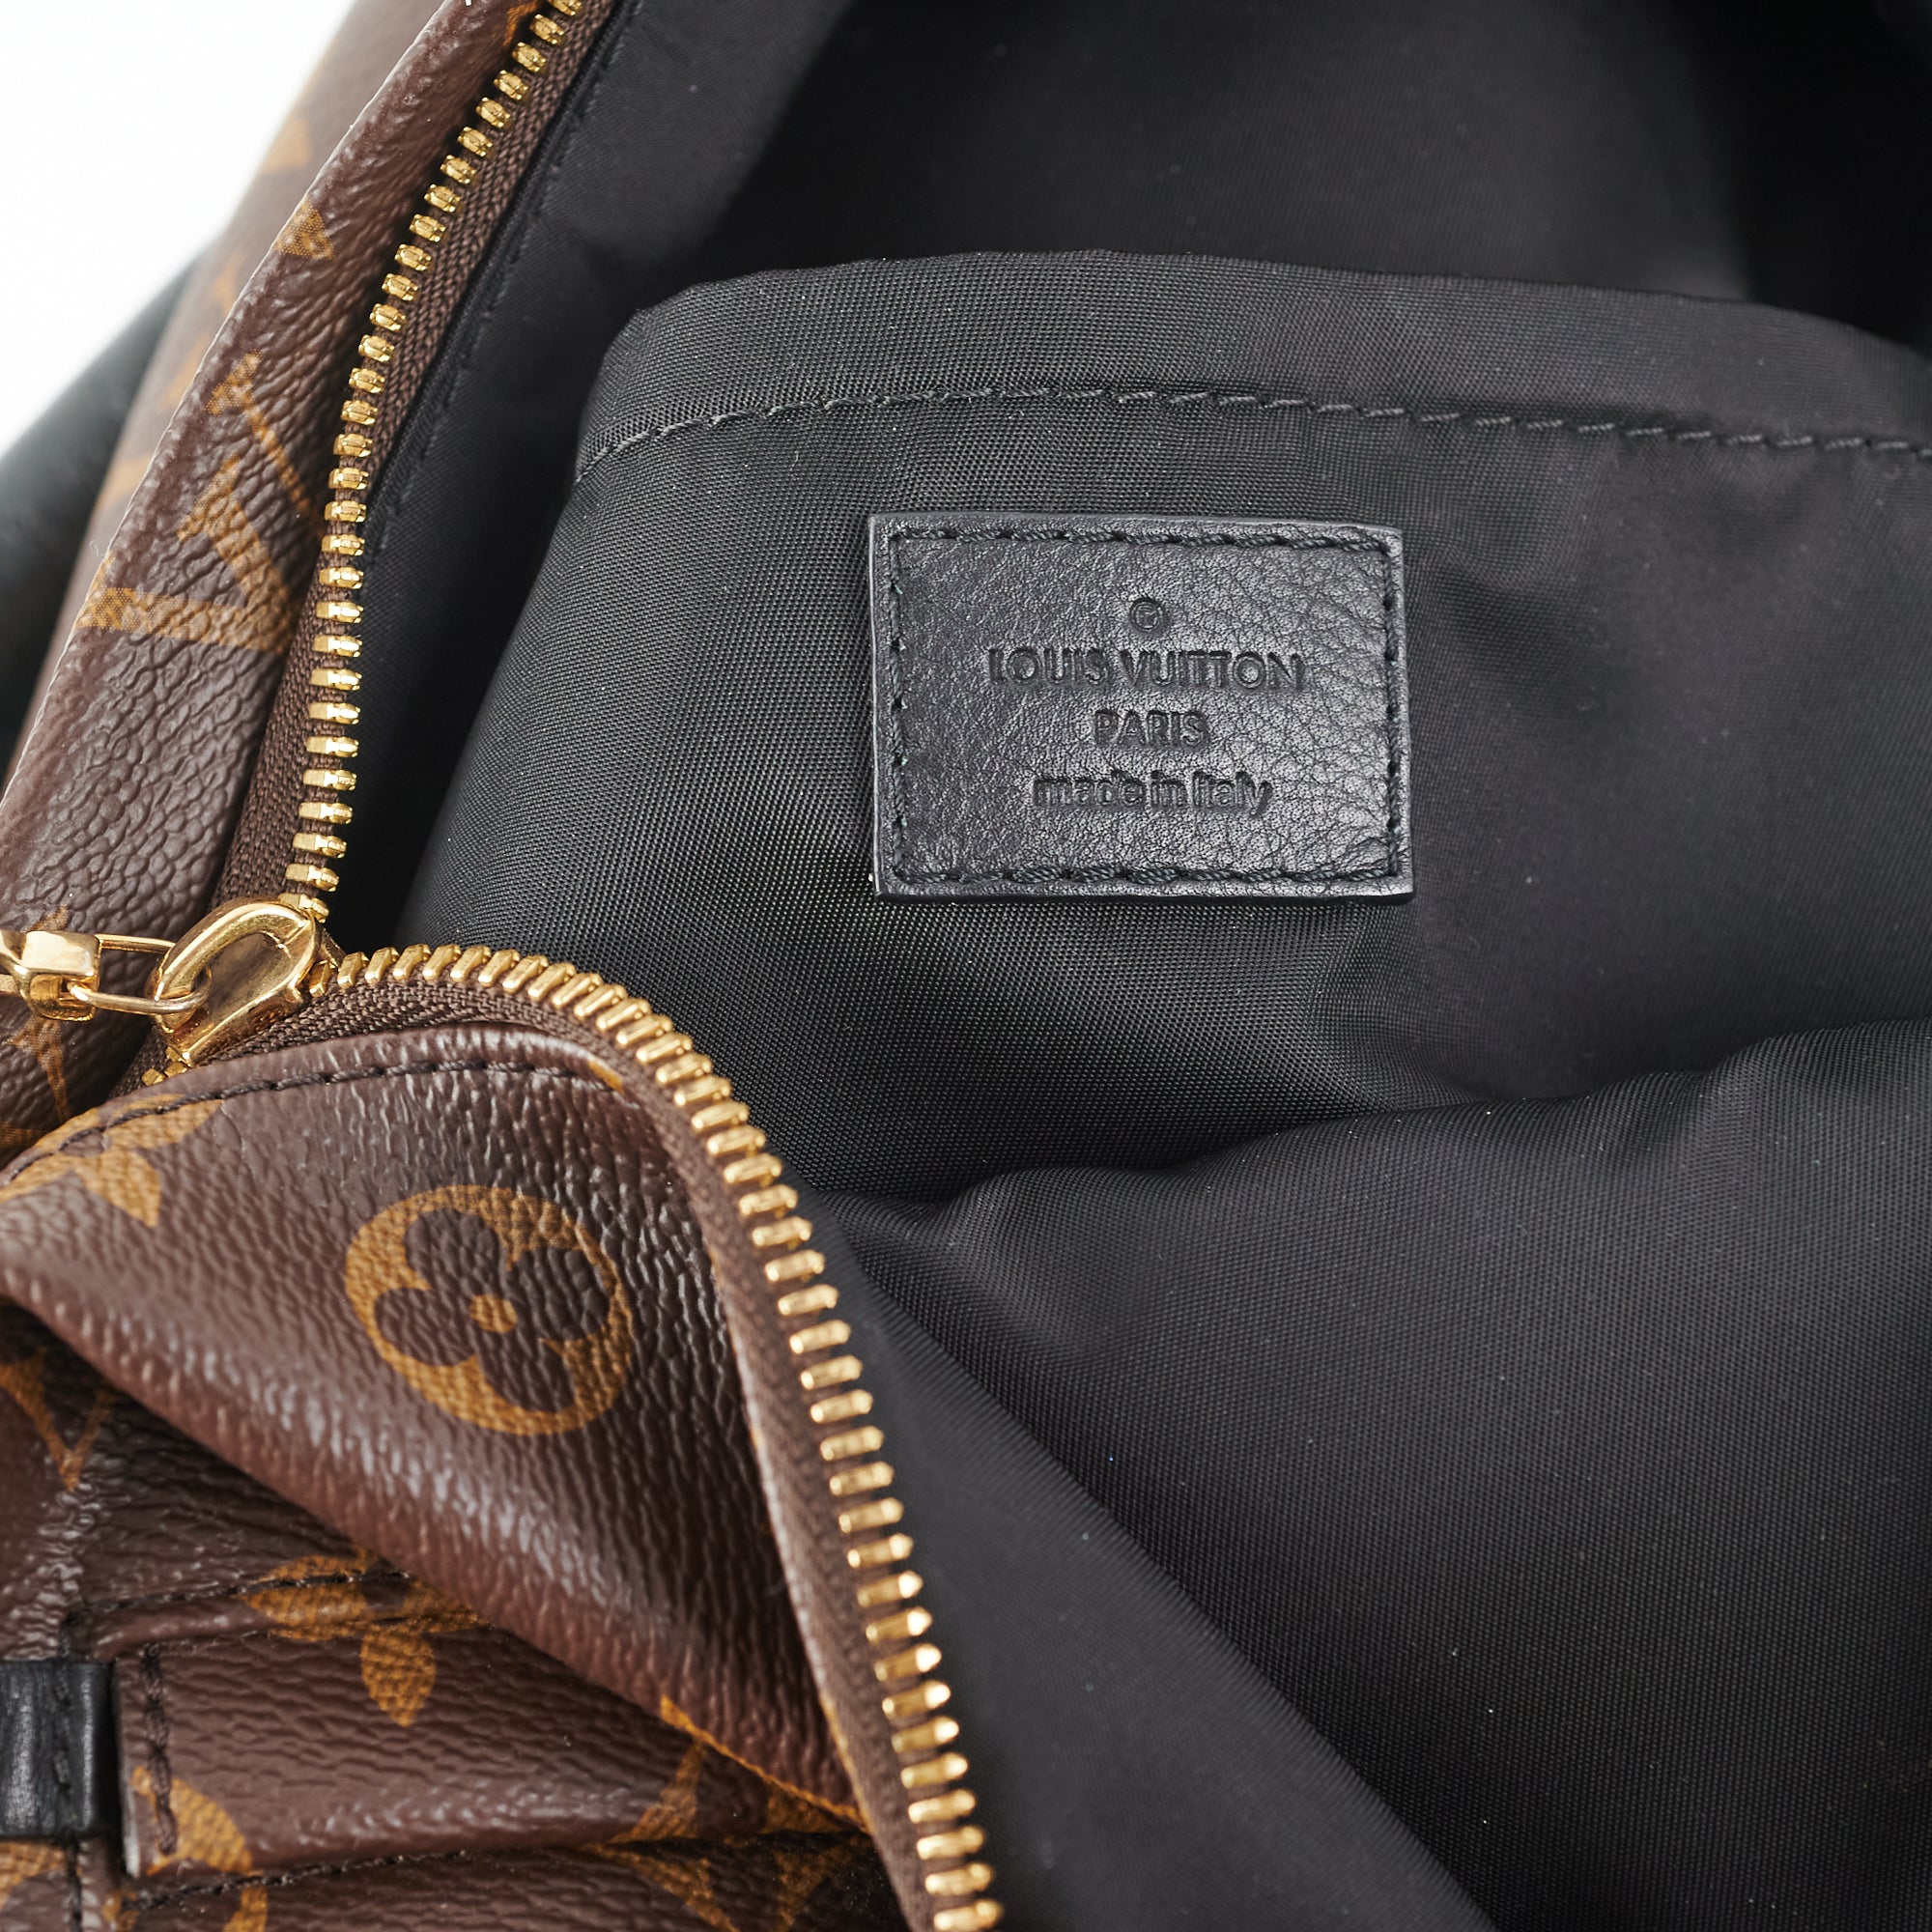 Louis Vuitton Palm Springs Backpack Backpack 403260, Extension-fmedShops